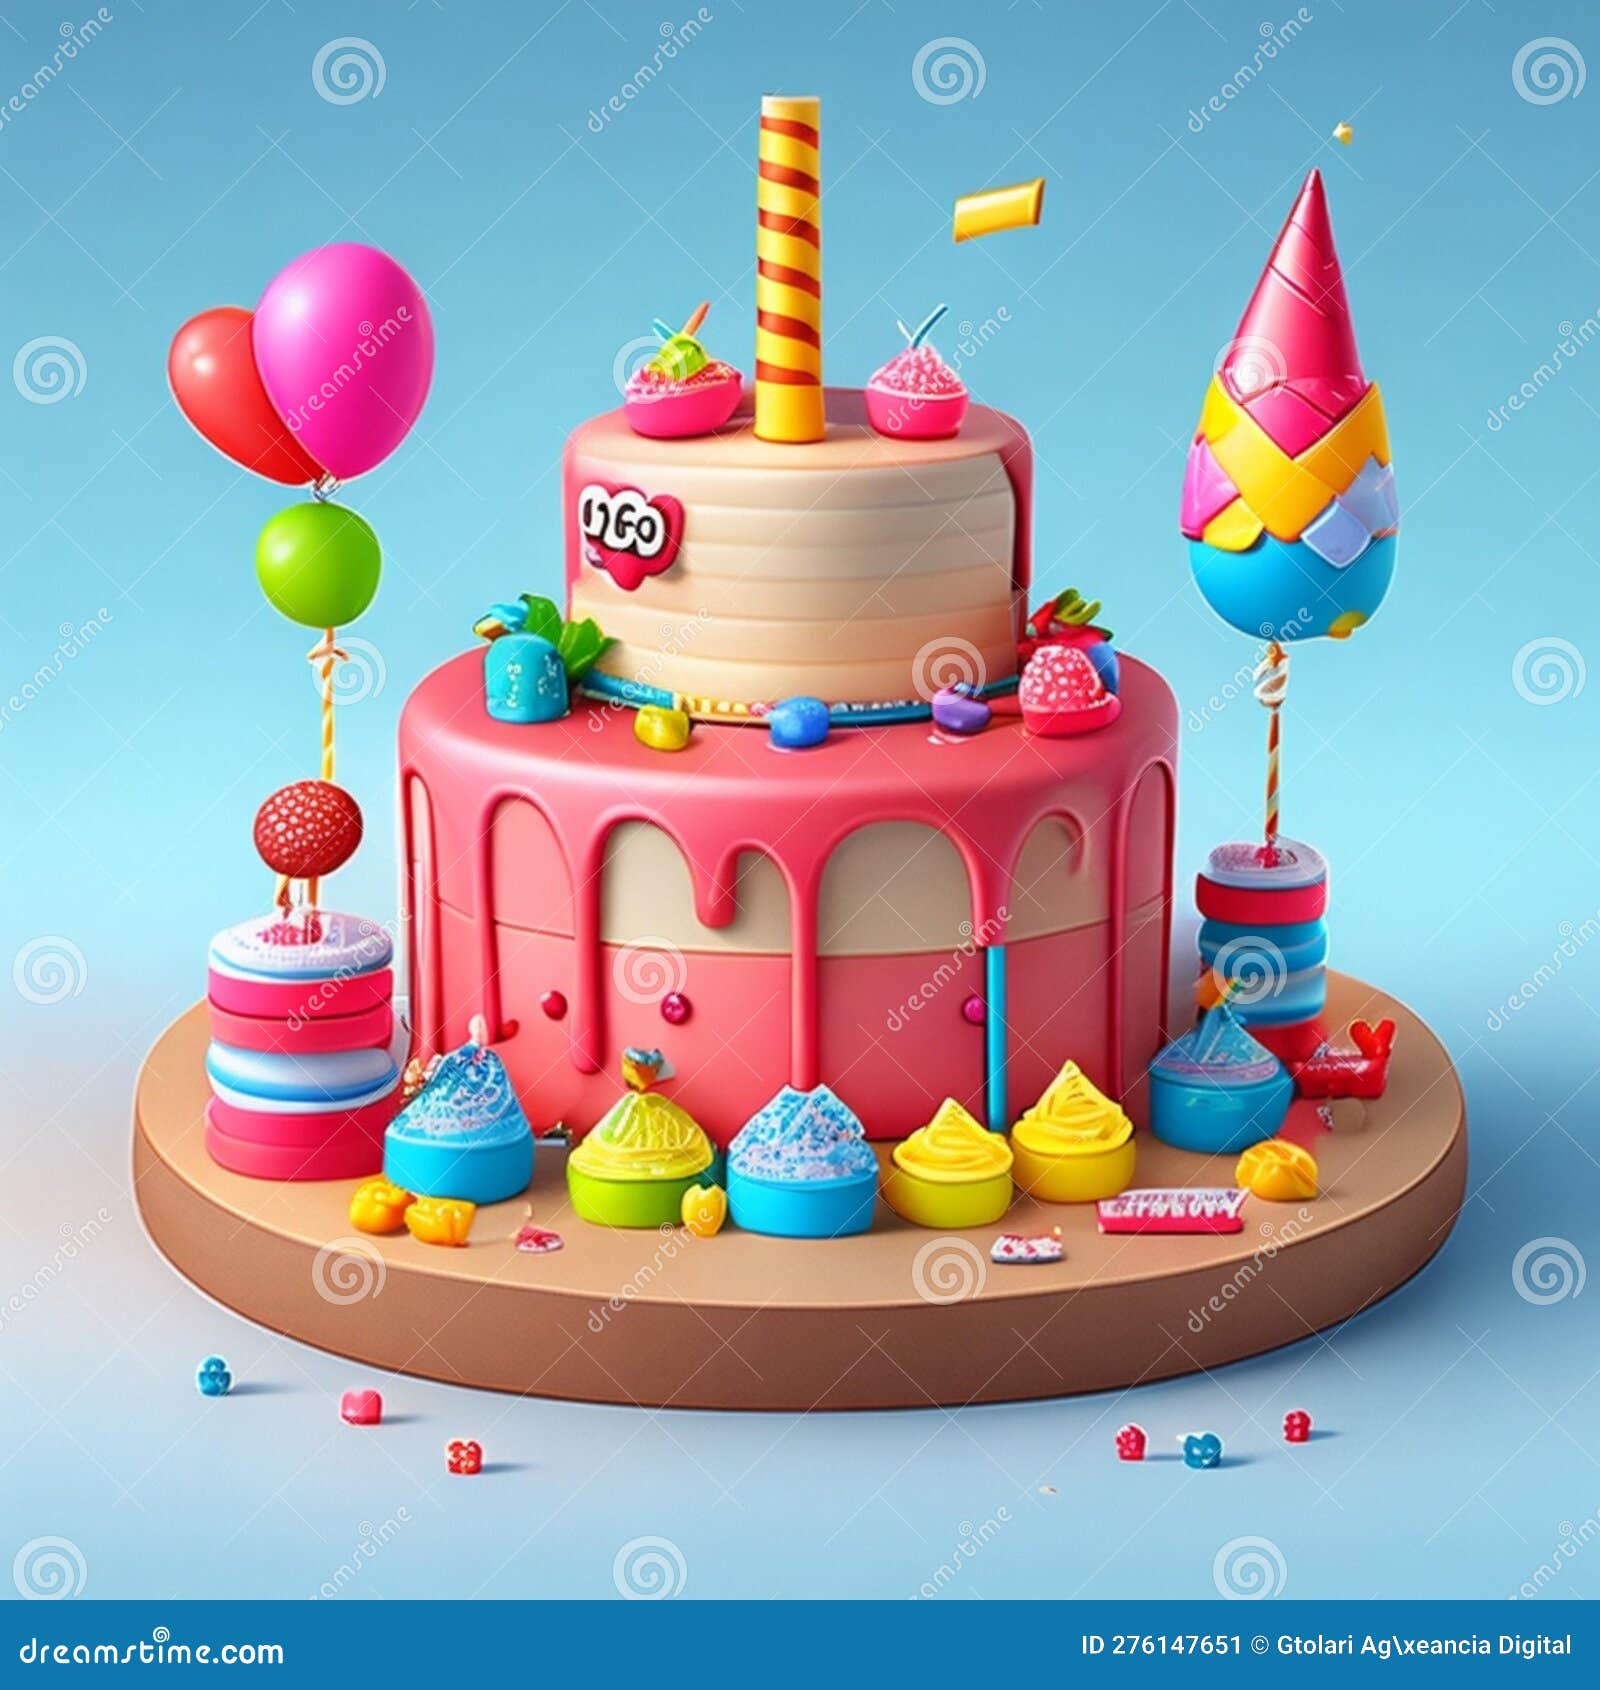 3,100+ Birthday Cake 3d Stock Photos, Pictures & Royalty-Free Images -  iStock | Happy birthday